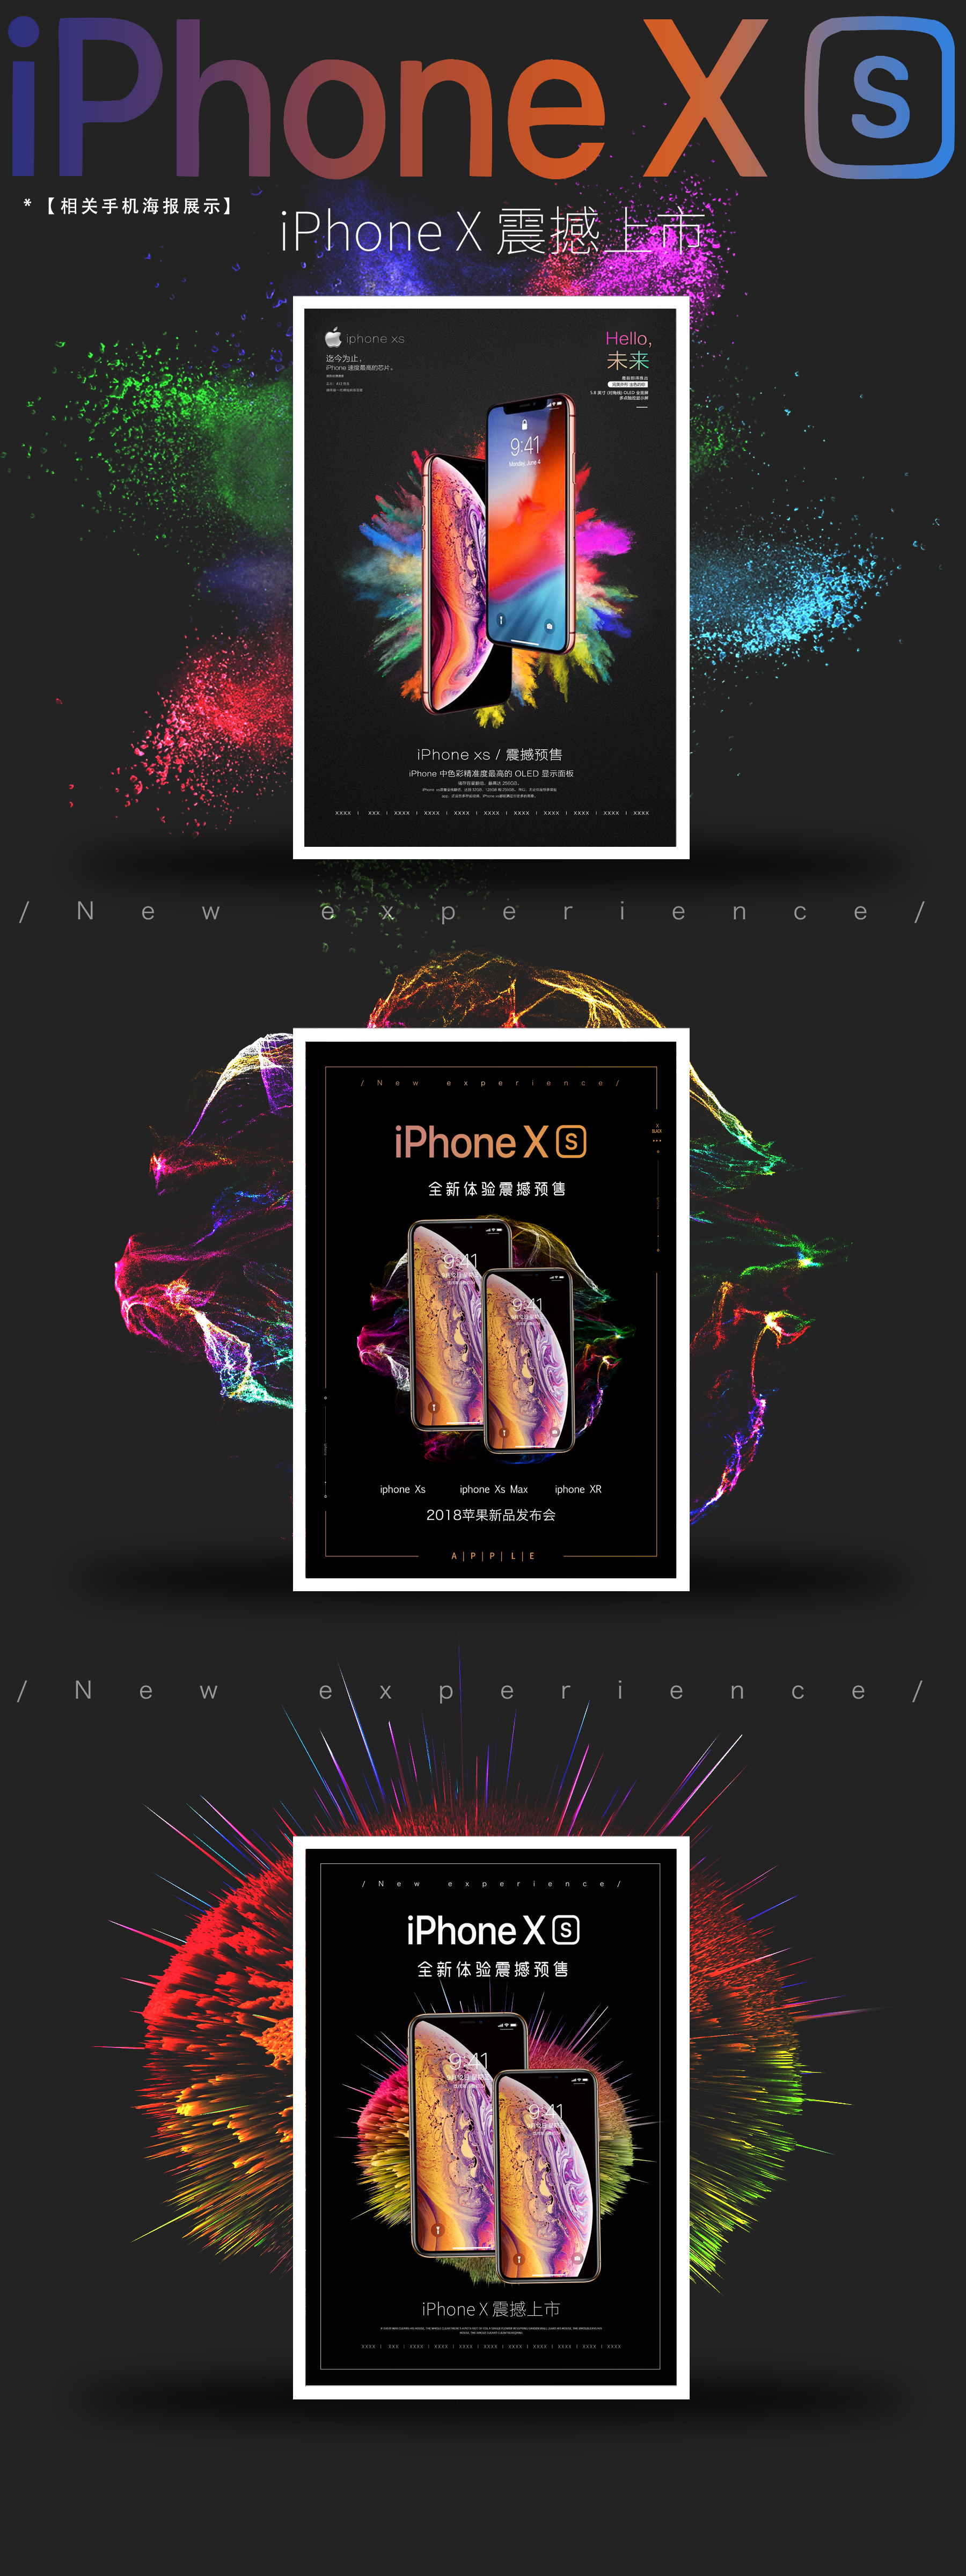 iphonex发布海报设计